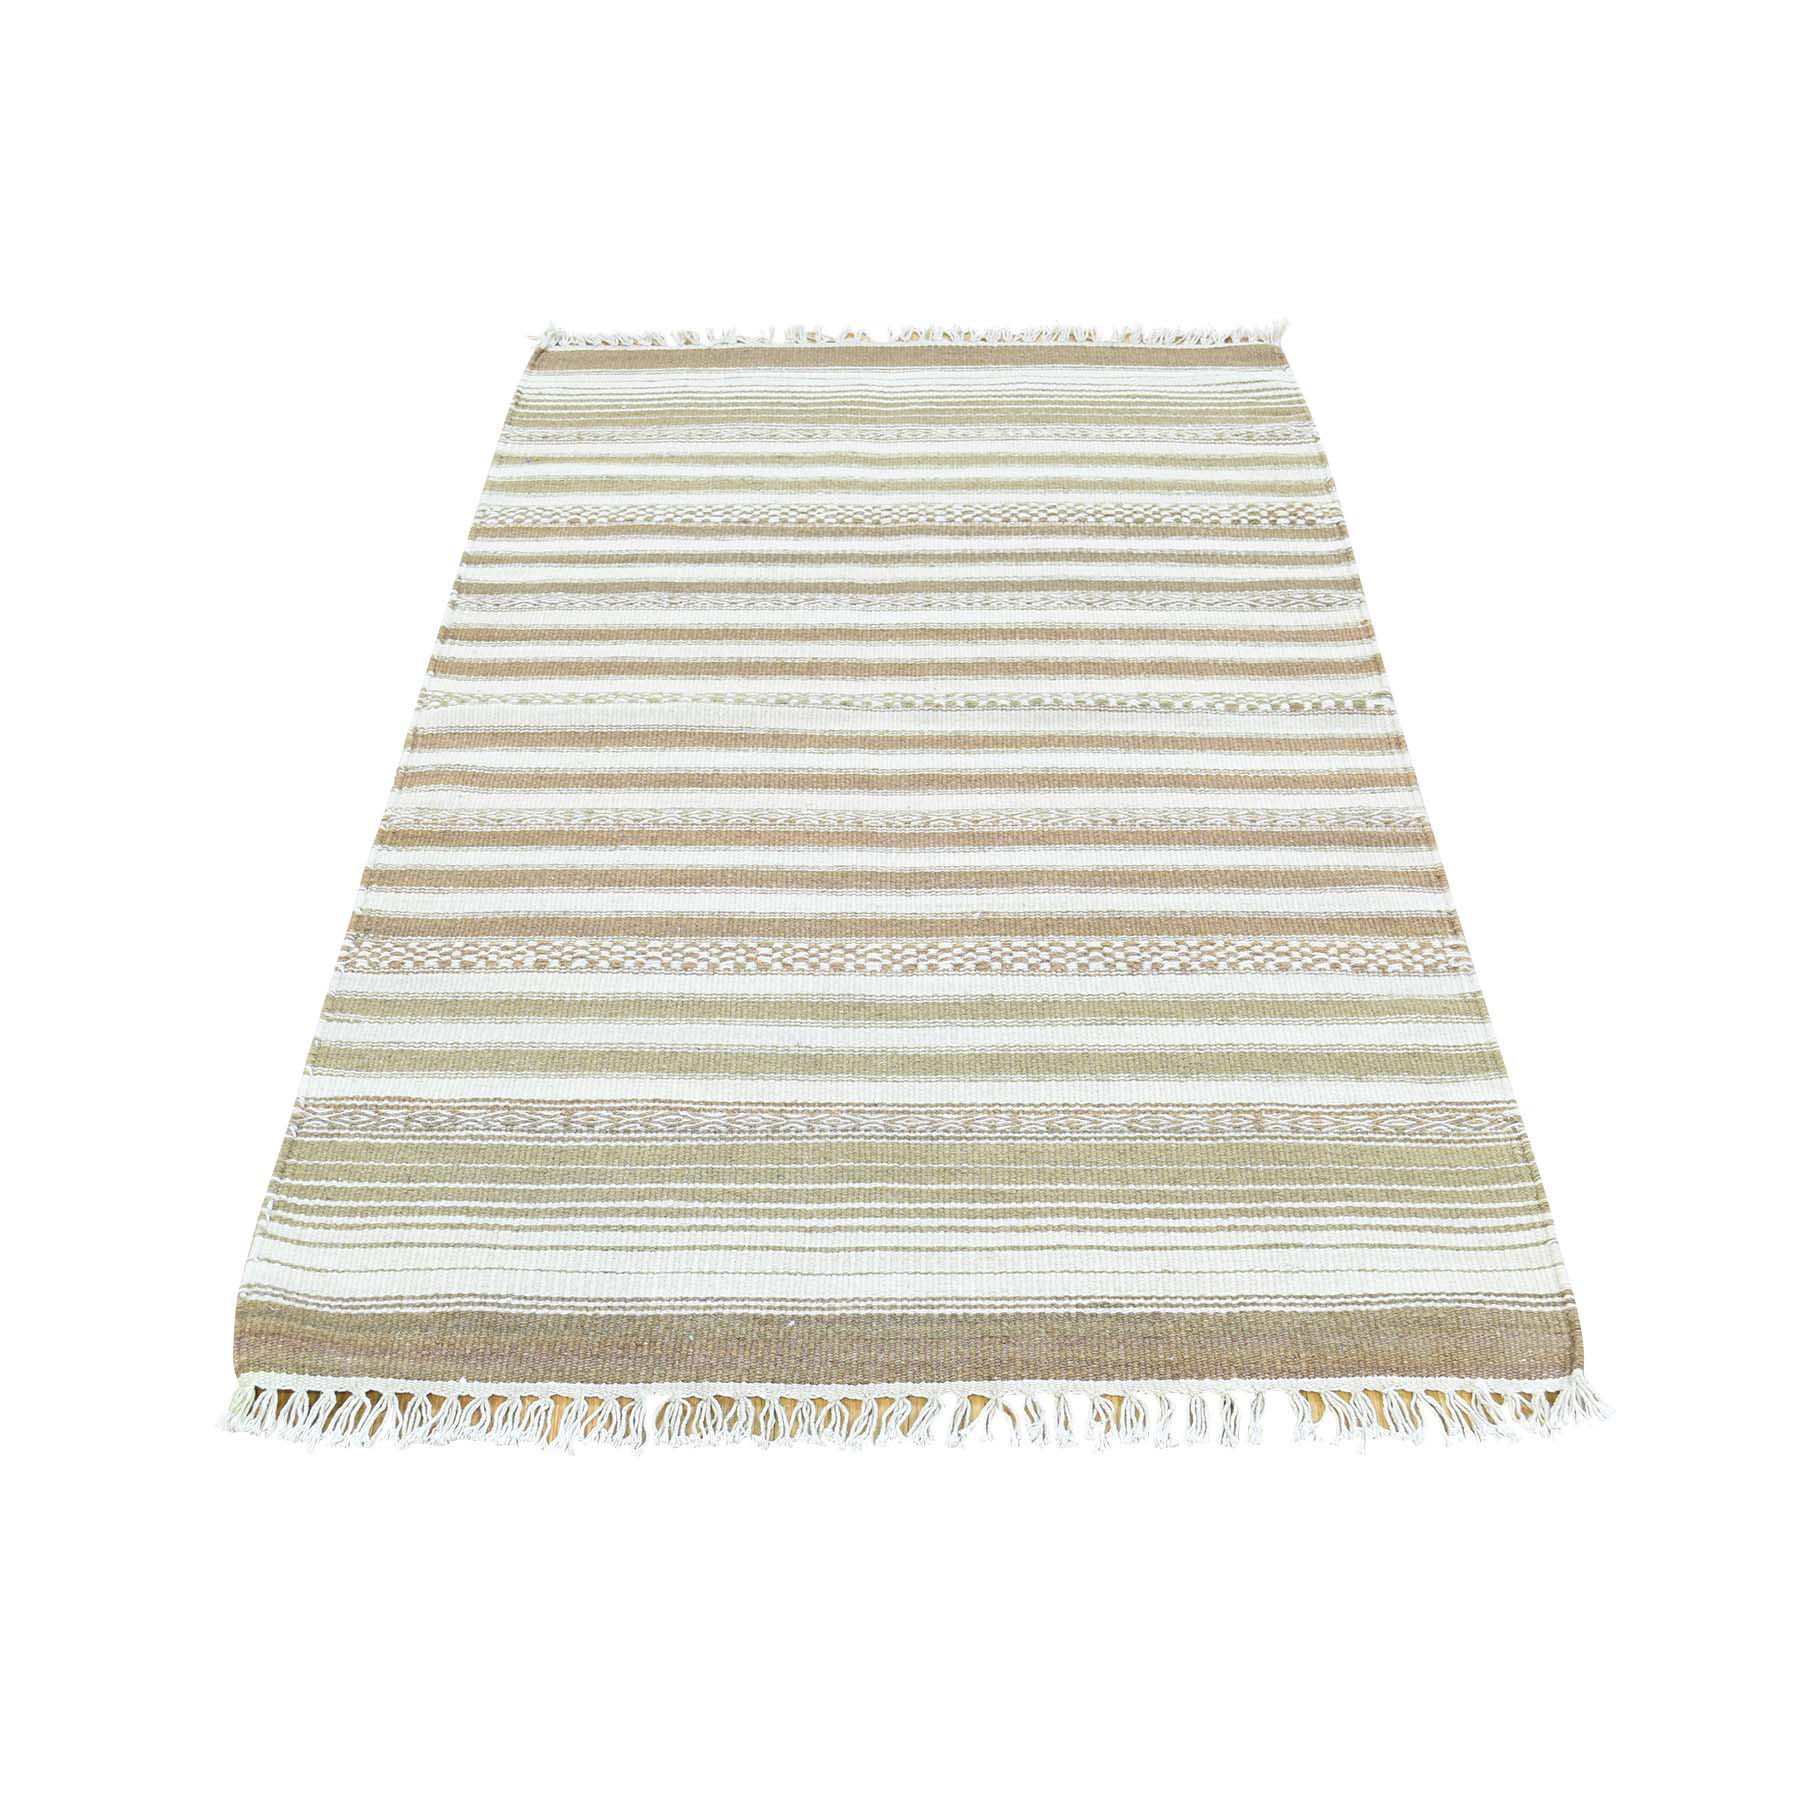 2'10"X5' Hand-Woven Striped Durie Kilim Flat Weave Oriental Carpet moaca8dd